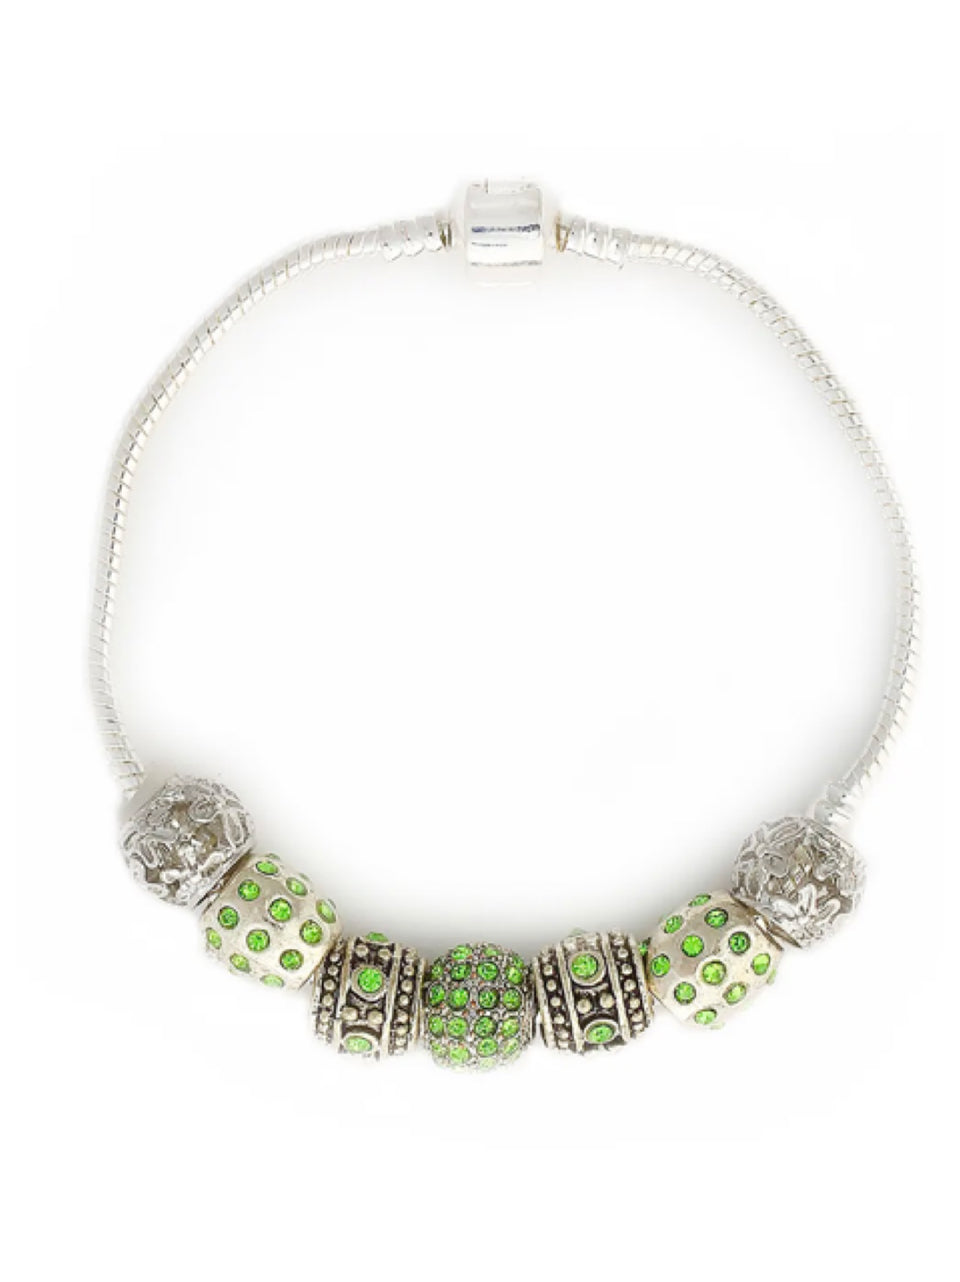 Pandora Inspired Charm Bracelet - Green